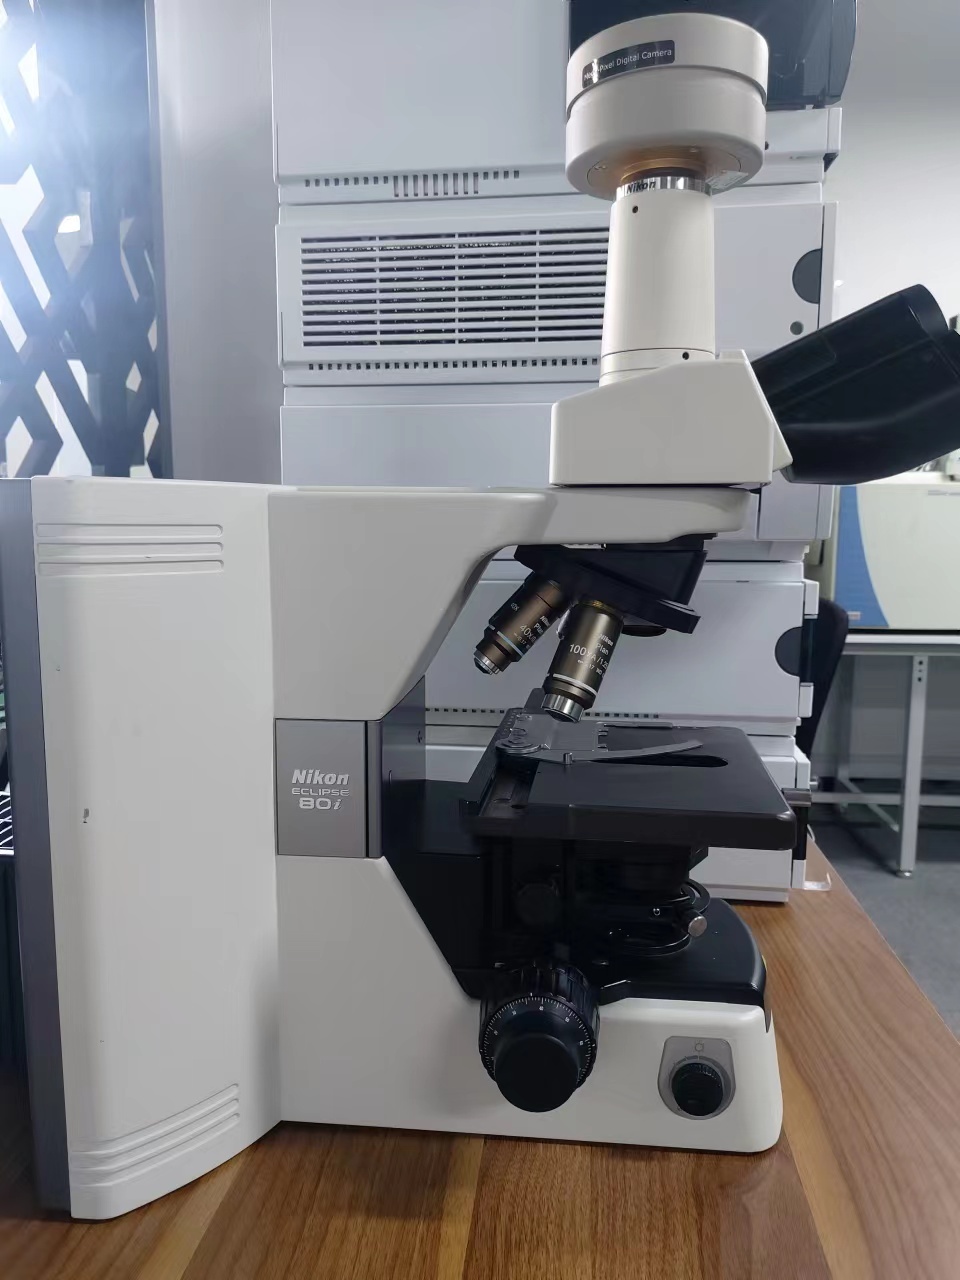 尼康ECLIPSE 80i显微镜